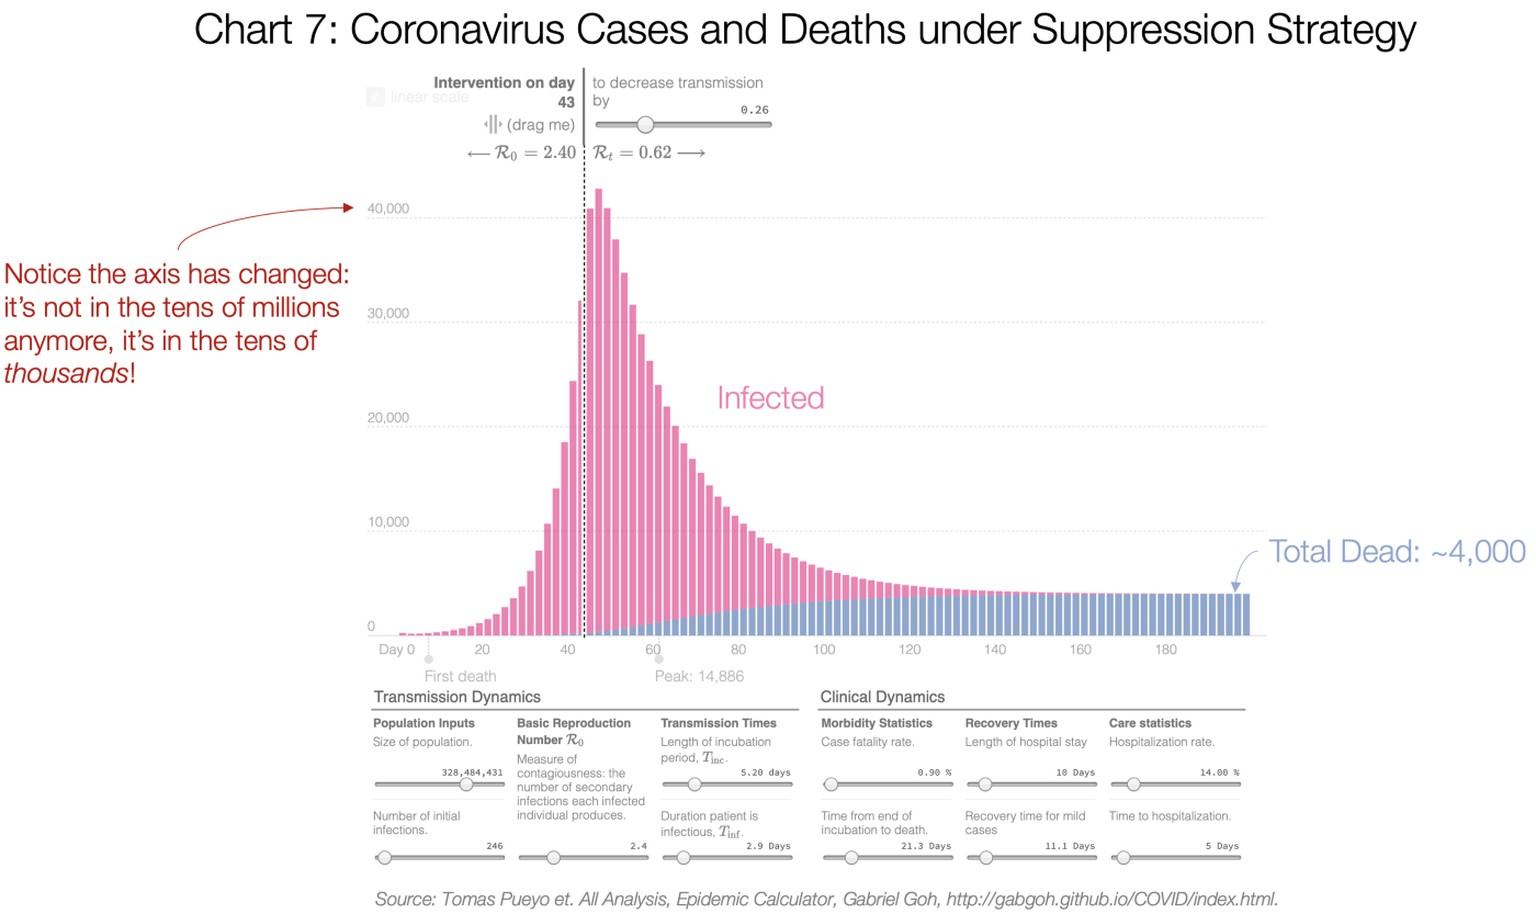 Diagramm: Coronavirus, Suppressionsstrategie gemäss Pueyo